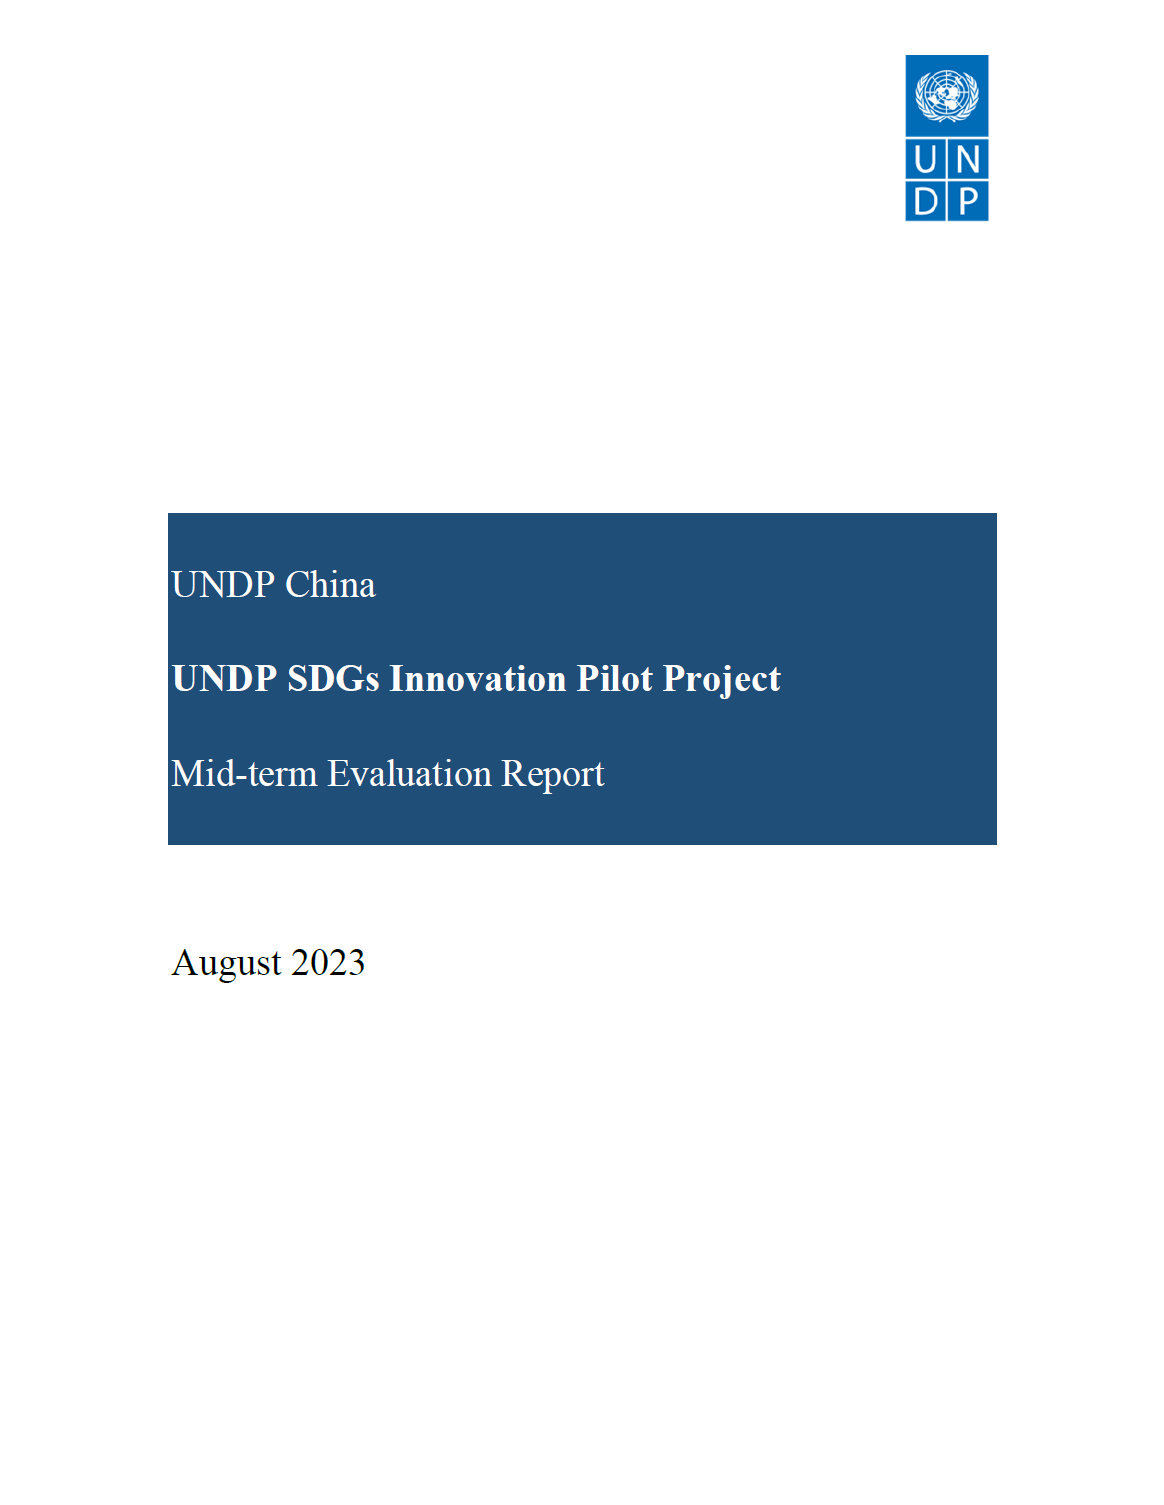 Mid-term Evaluation of UNDP SDGs Innovation Pilot (Chengdu Innovation Platform) Project